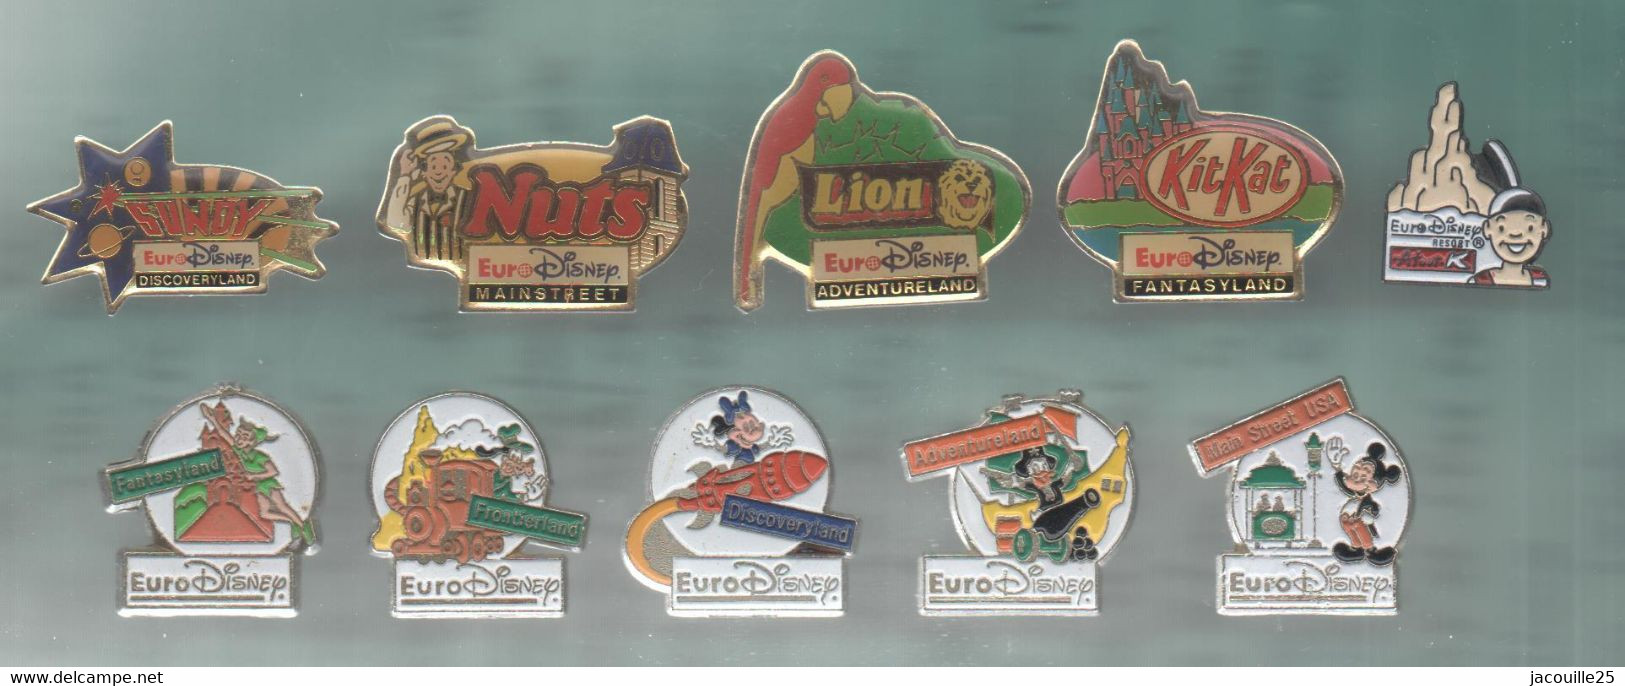 PINS PIN'S DISNEY 1143 EURODISNEY KODAK PETER PAN NUTS KIT KAT LION  MICKEY DINGO DONALD  LOT 10 PINS - Disney